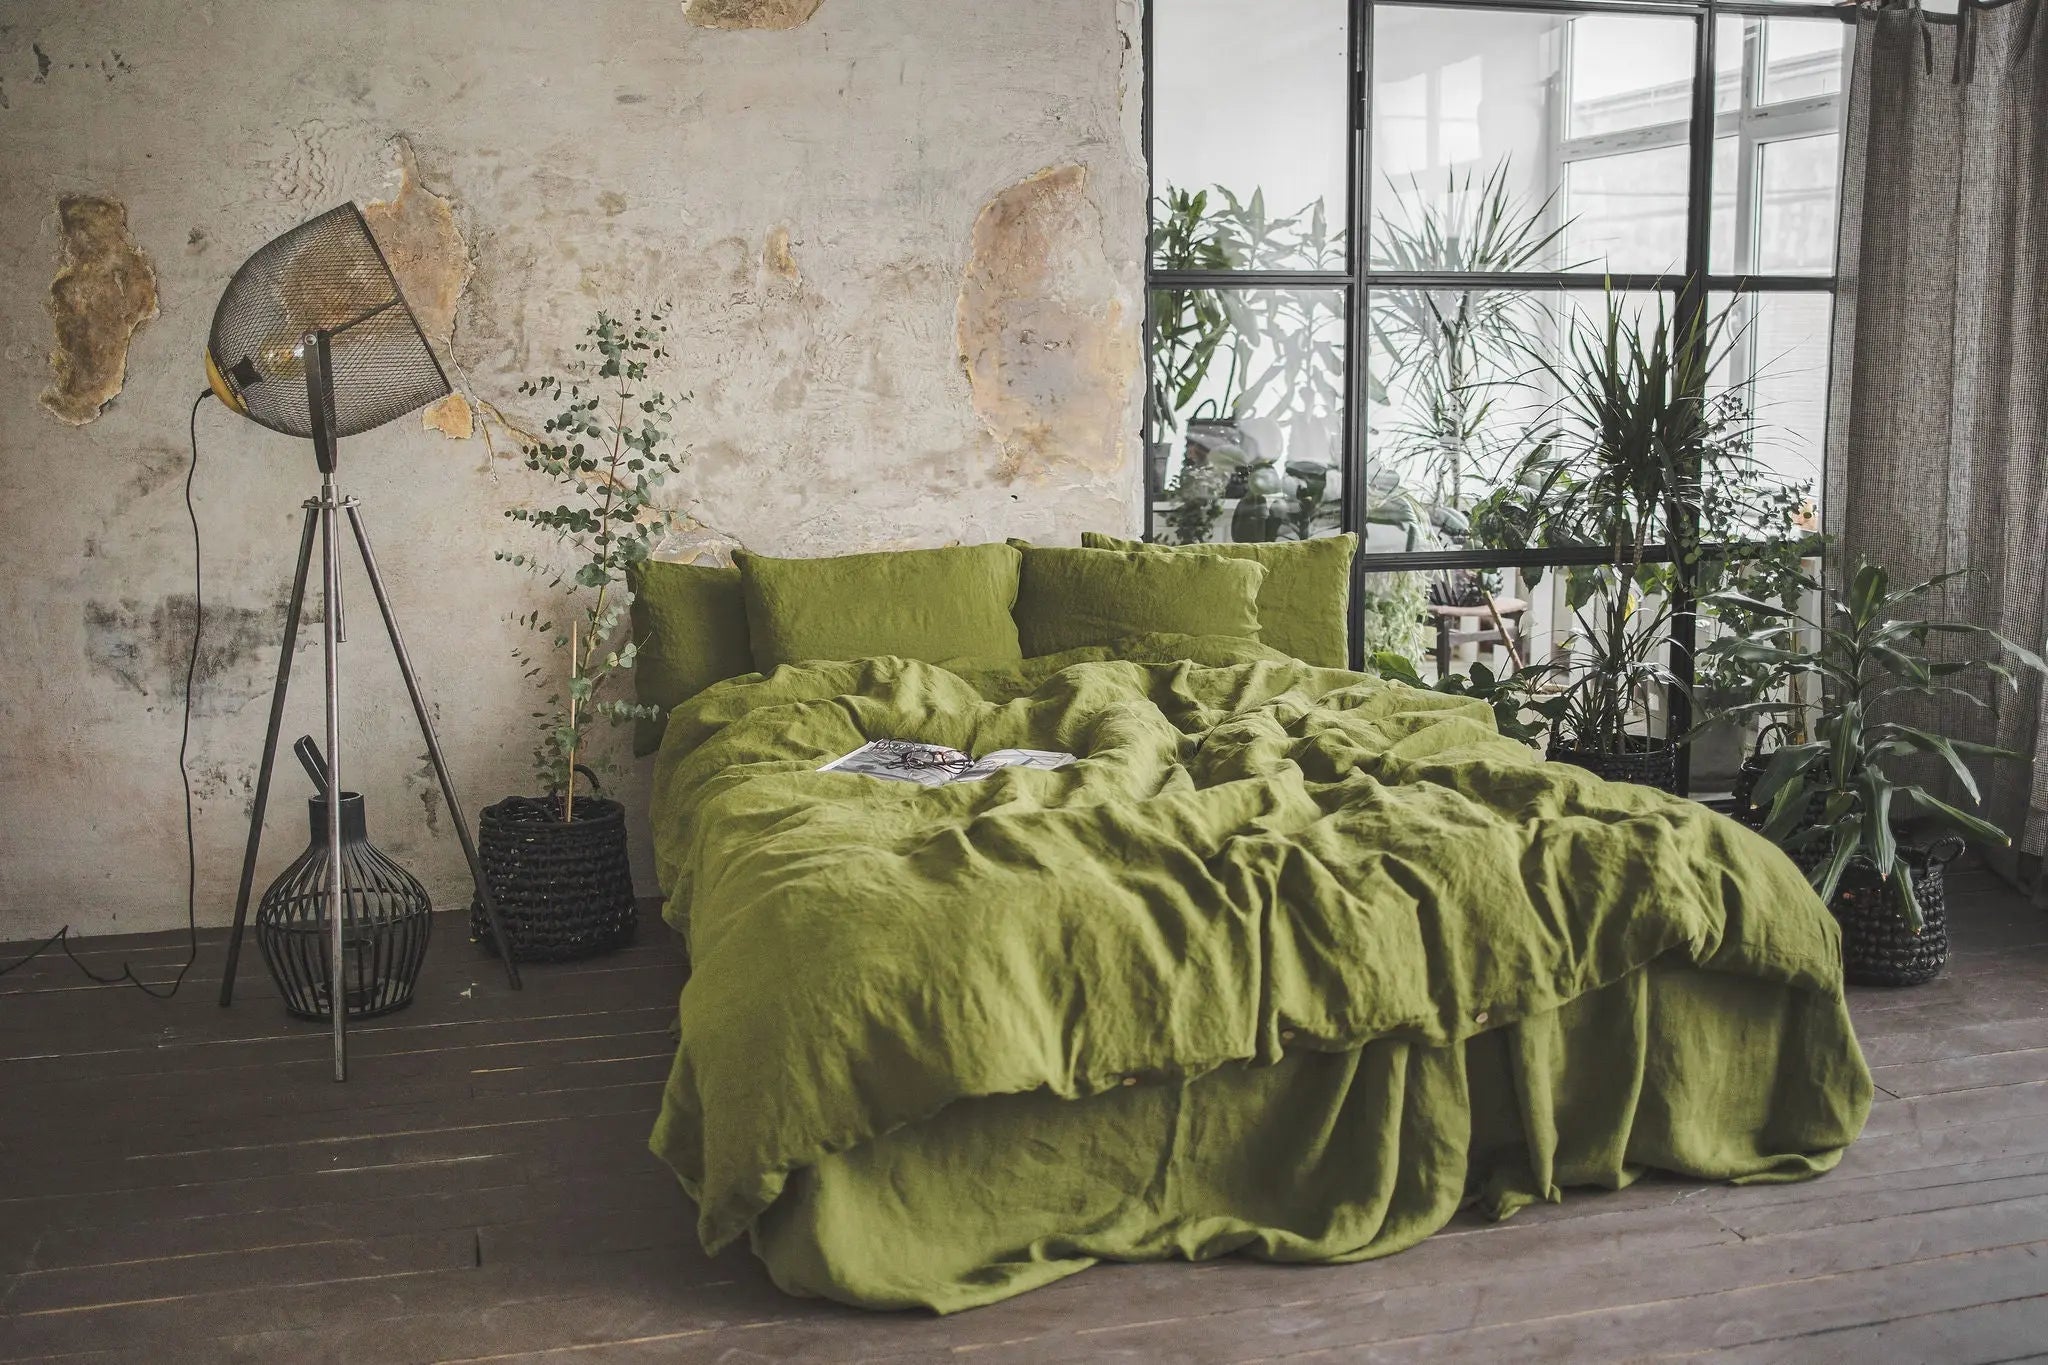 Green Moss Stonewashed Linen Bedding Set - Epic Linen luxury linen